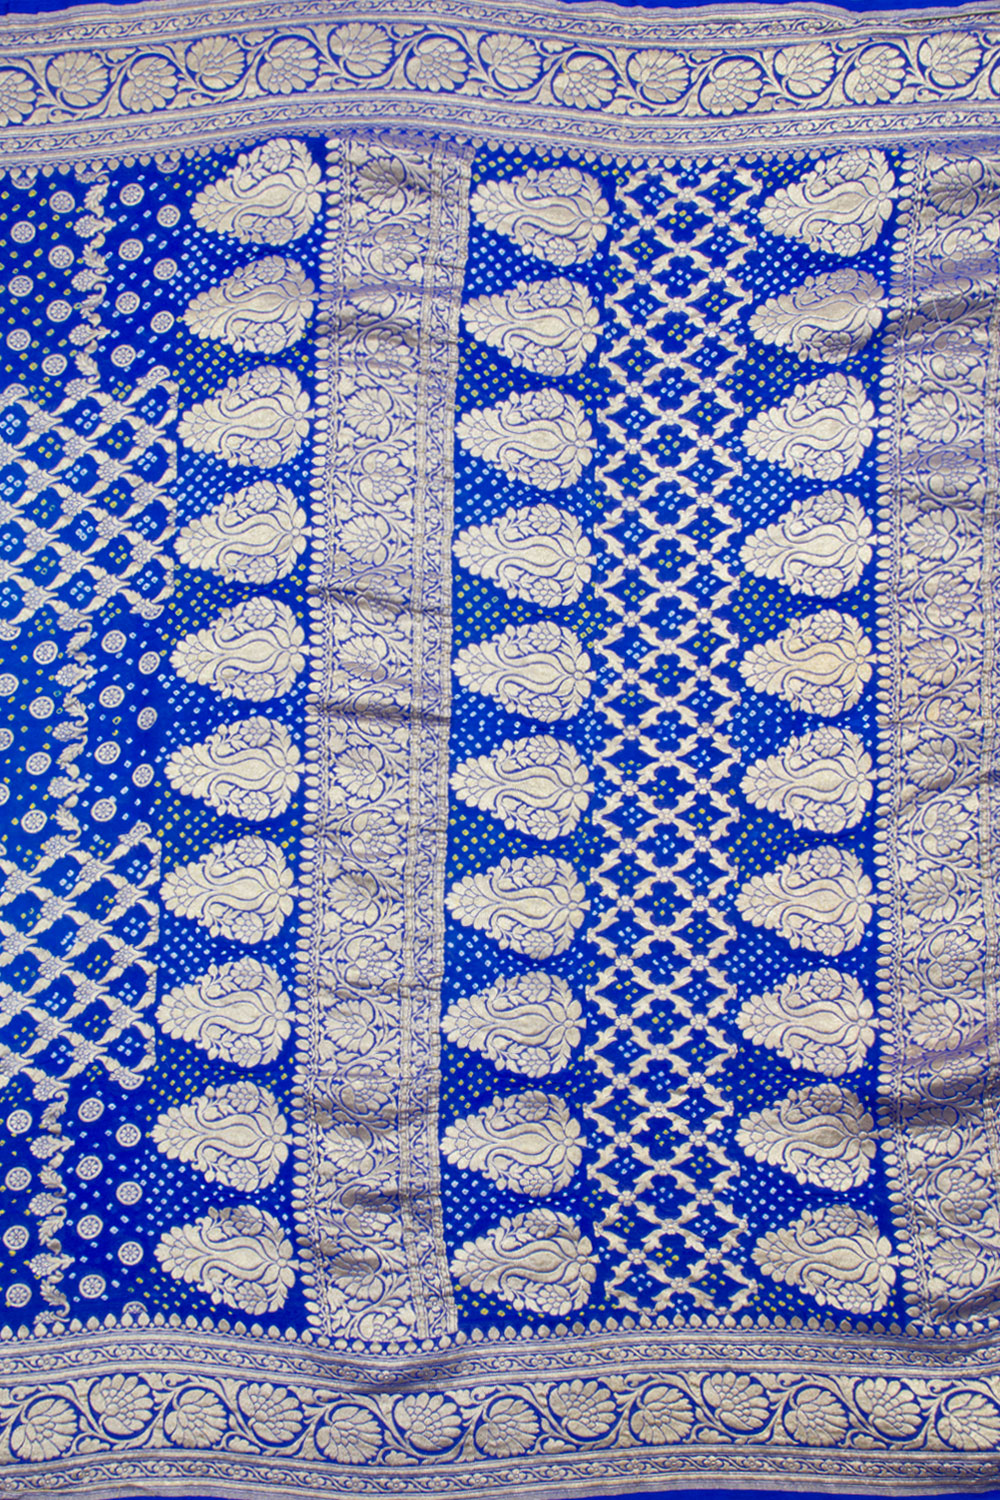 Blue Handcrafted Banarasi Bandhani Georgette Saree 10060912